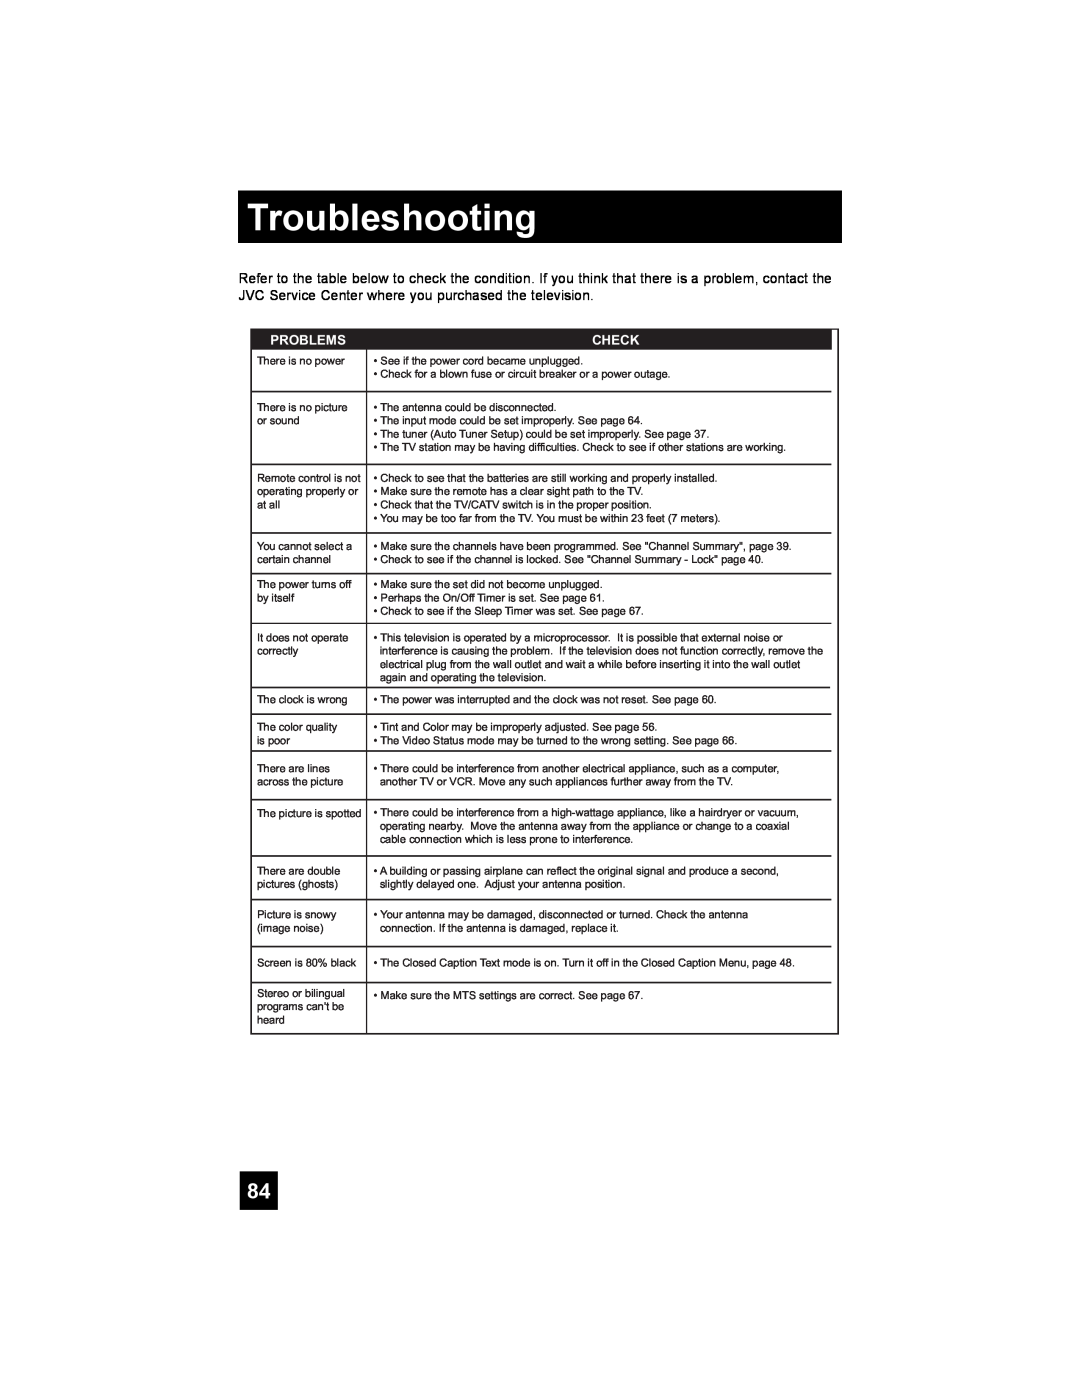 JVC PD-42X776 manual Troubleshooting, Problems, Check 